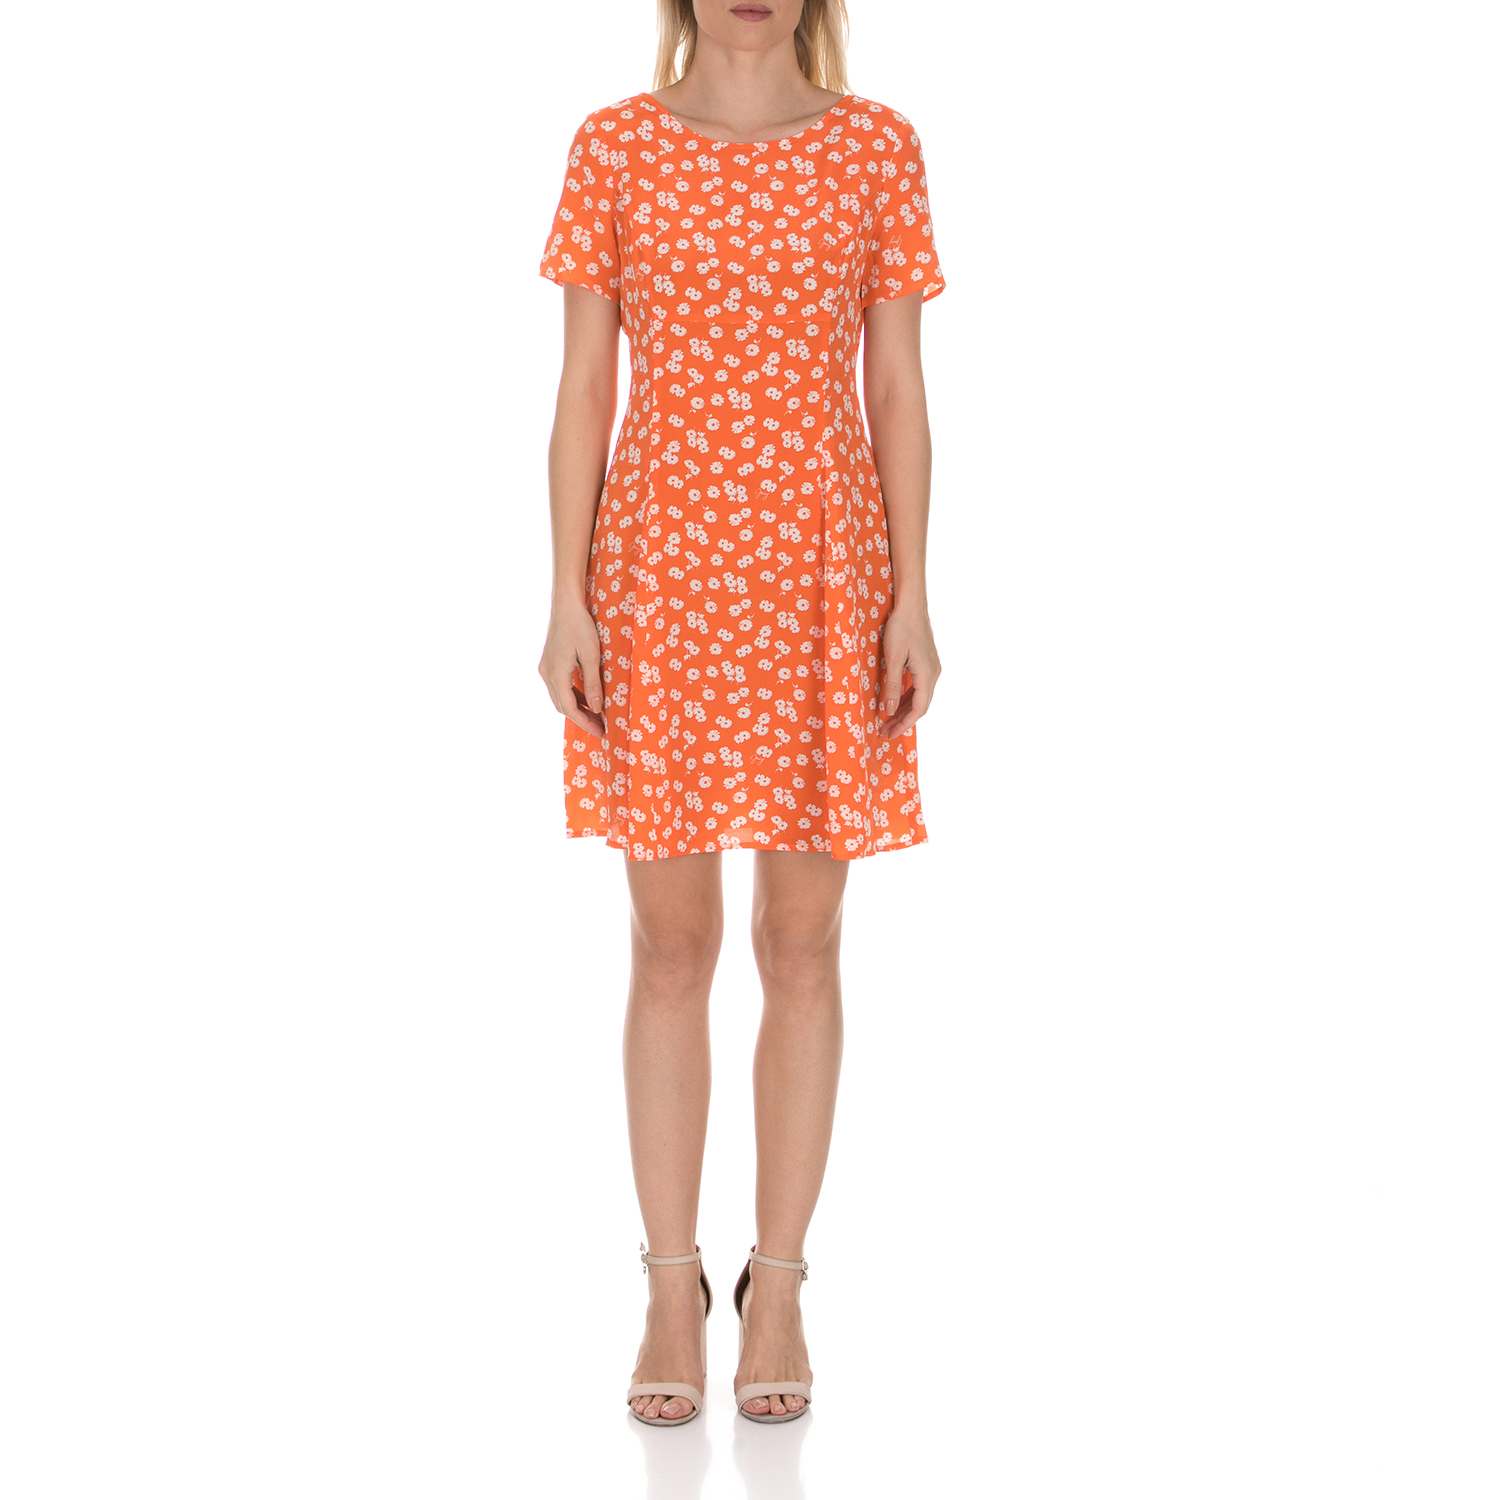 JUICY COUTURE - Γυναικείο μίνι φόρεμα JUICY COUTURE DAISY πορτοκαλί Γυναικεία/Ρούχα/Φορέματα/Μίνι